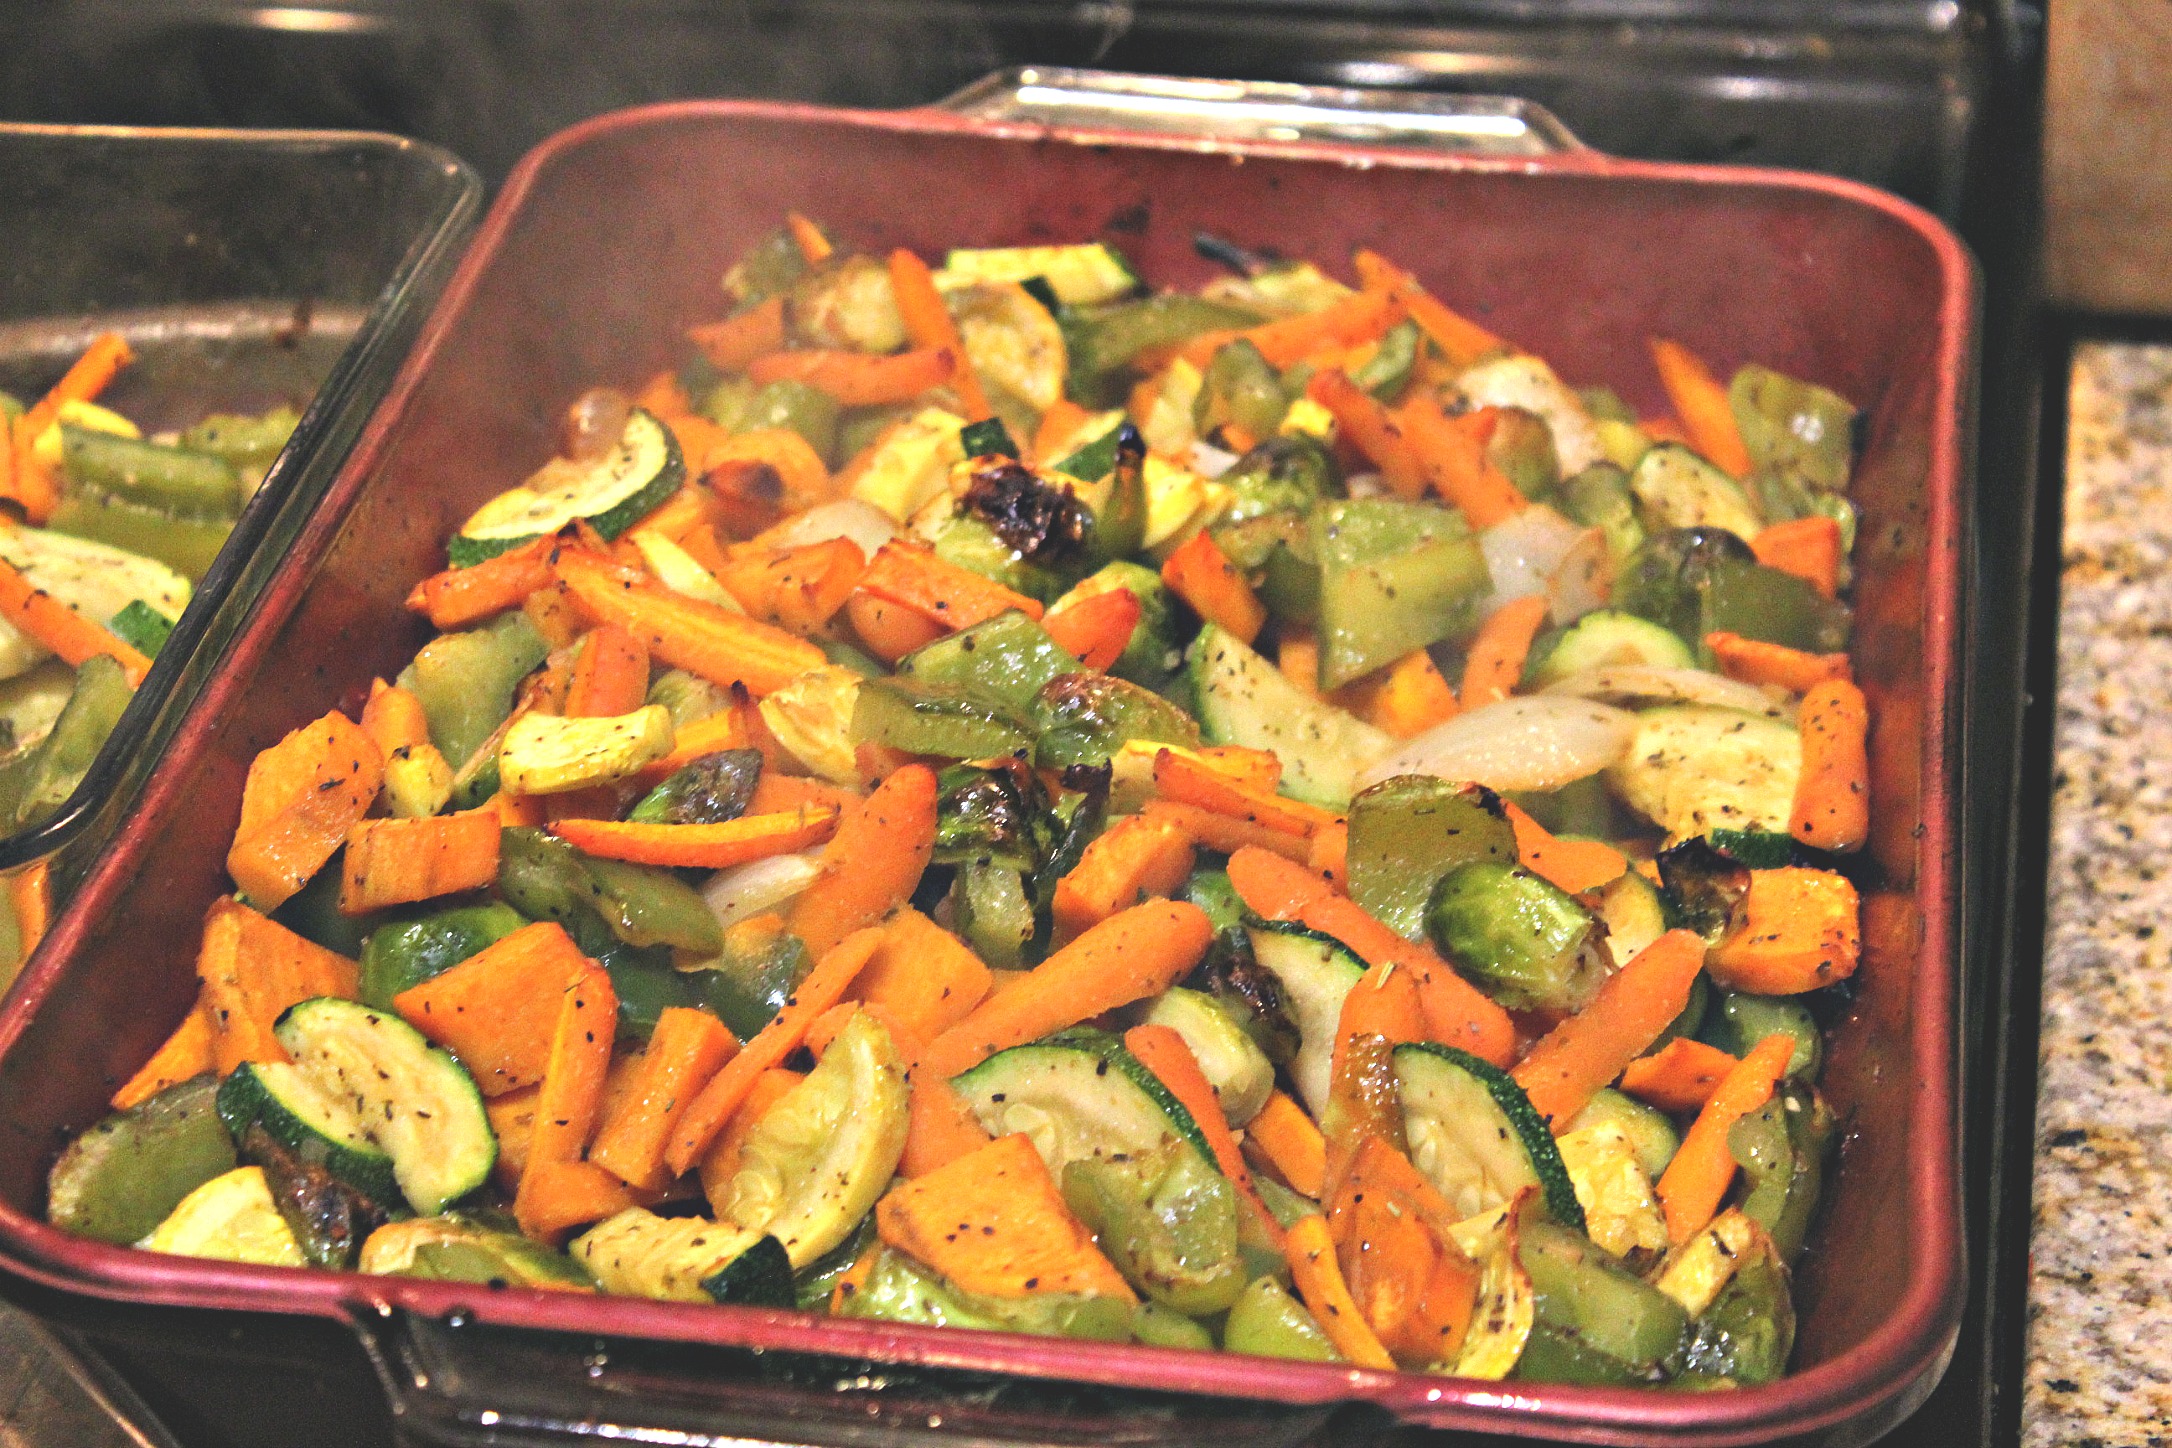 Grilled Chicken, Roasted Vegetables & Healthy Dinner